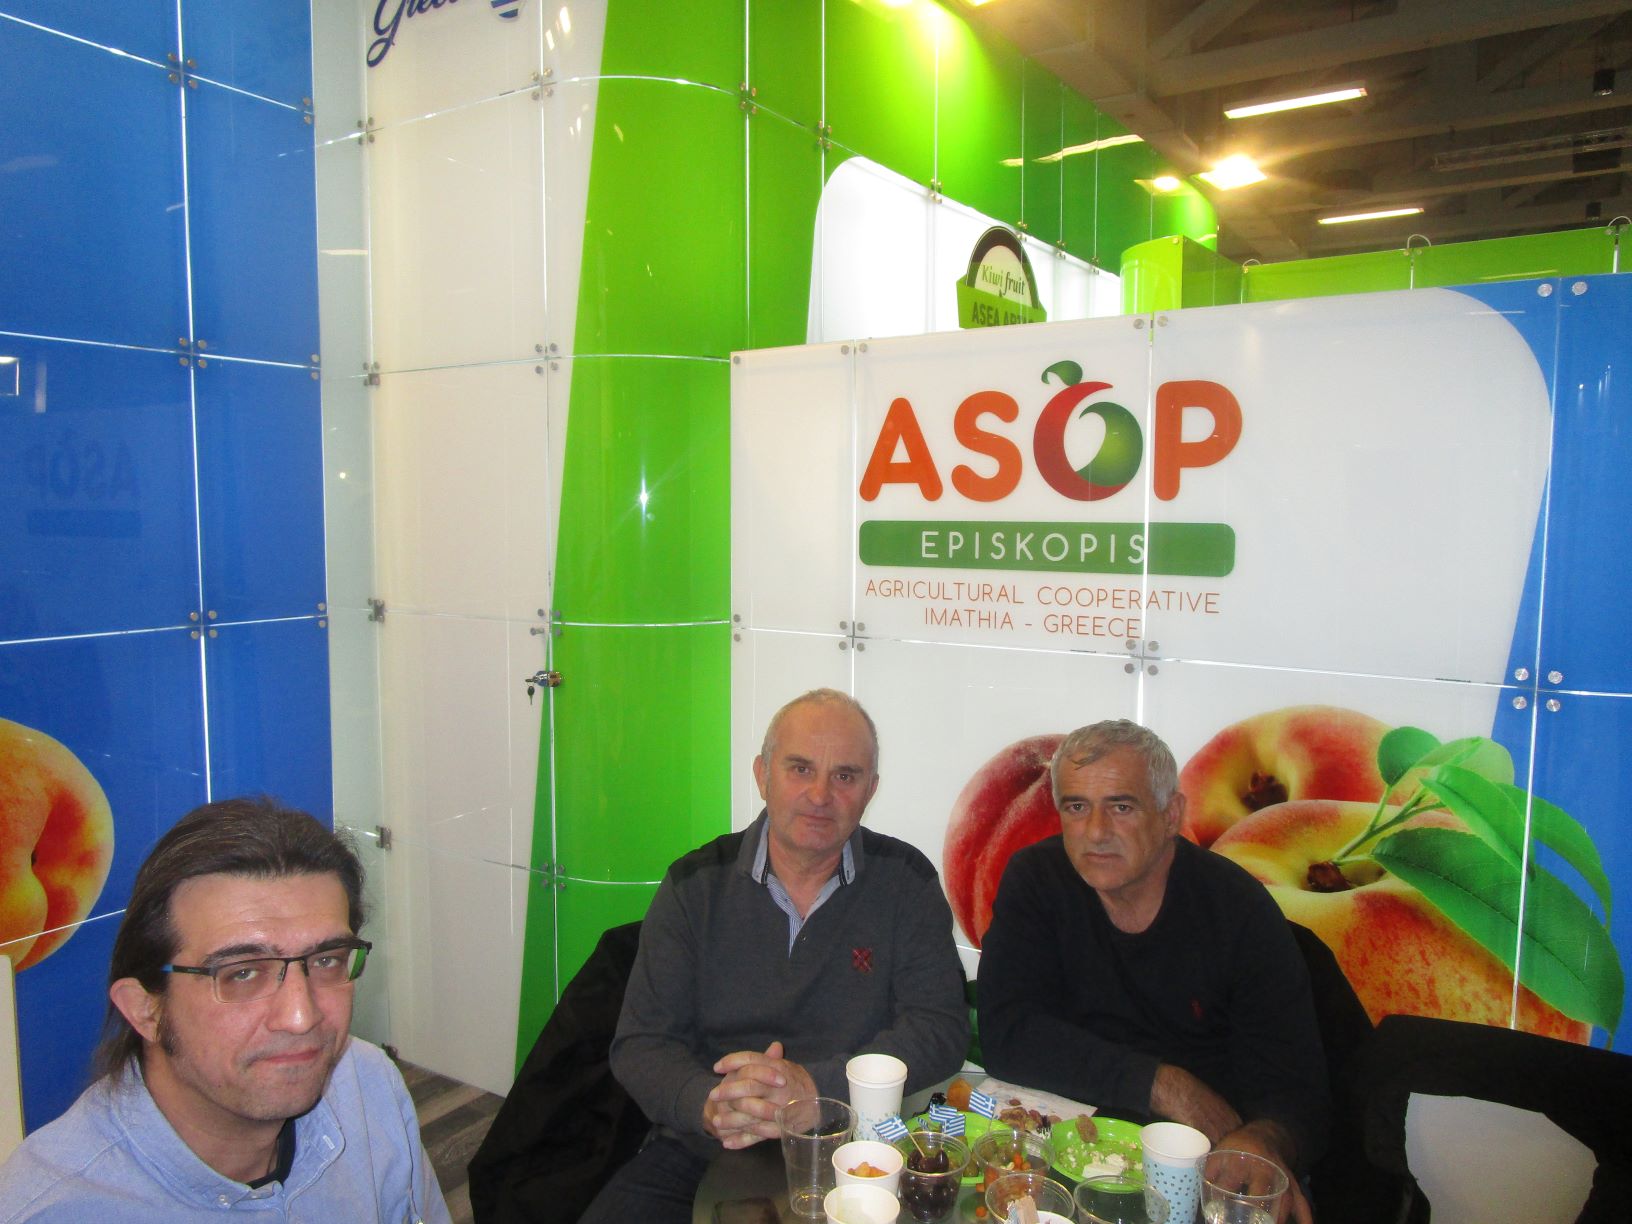 ASOP Episkopi targets Eastern European markets